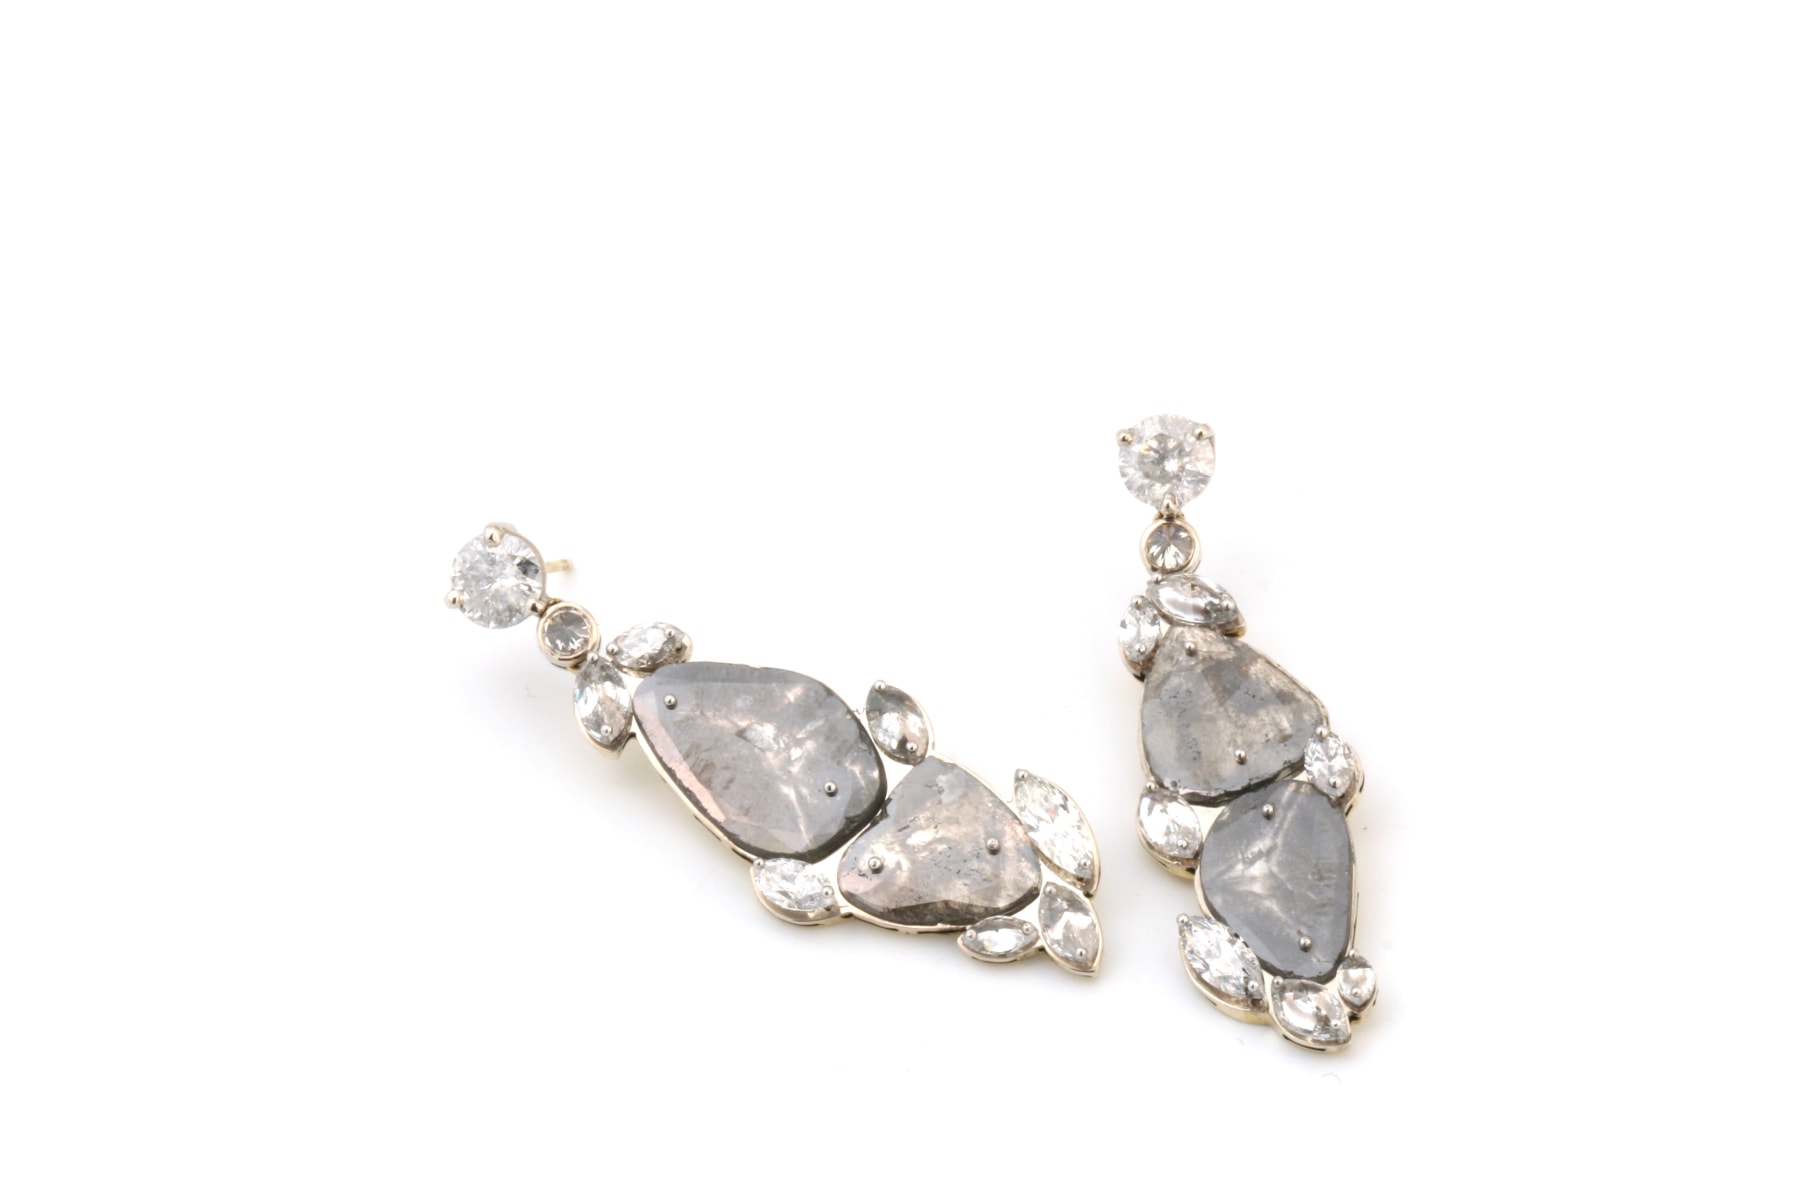 Todd Pownell, diamond earrings